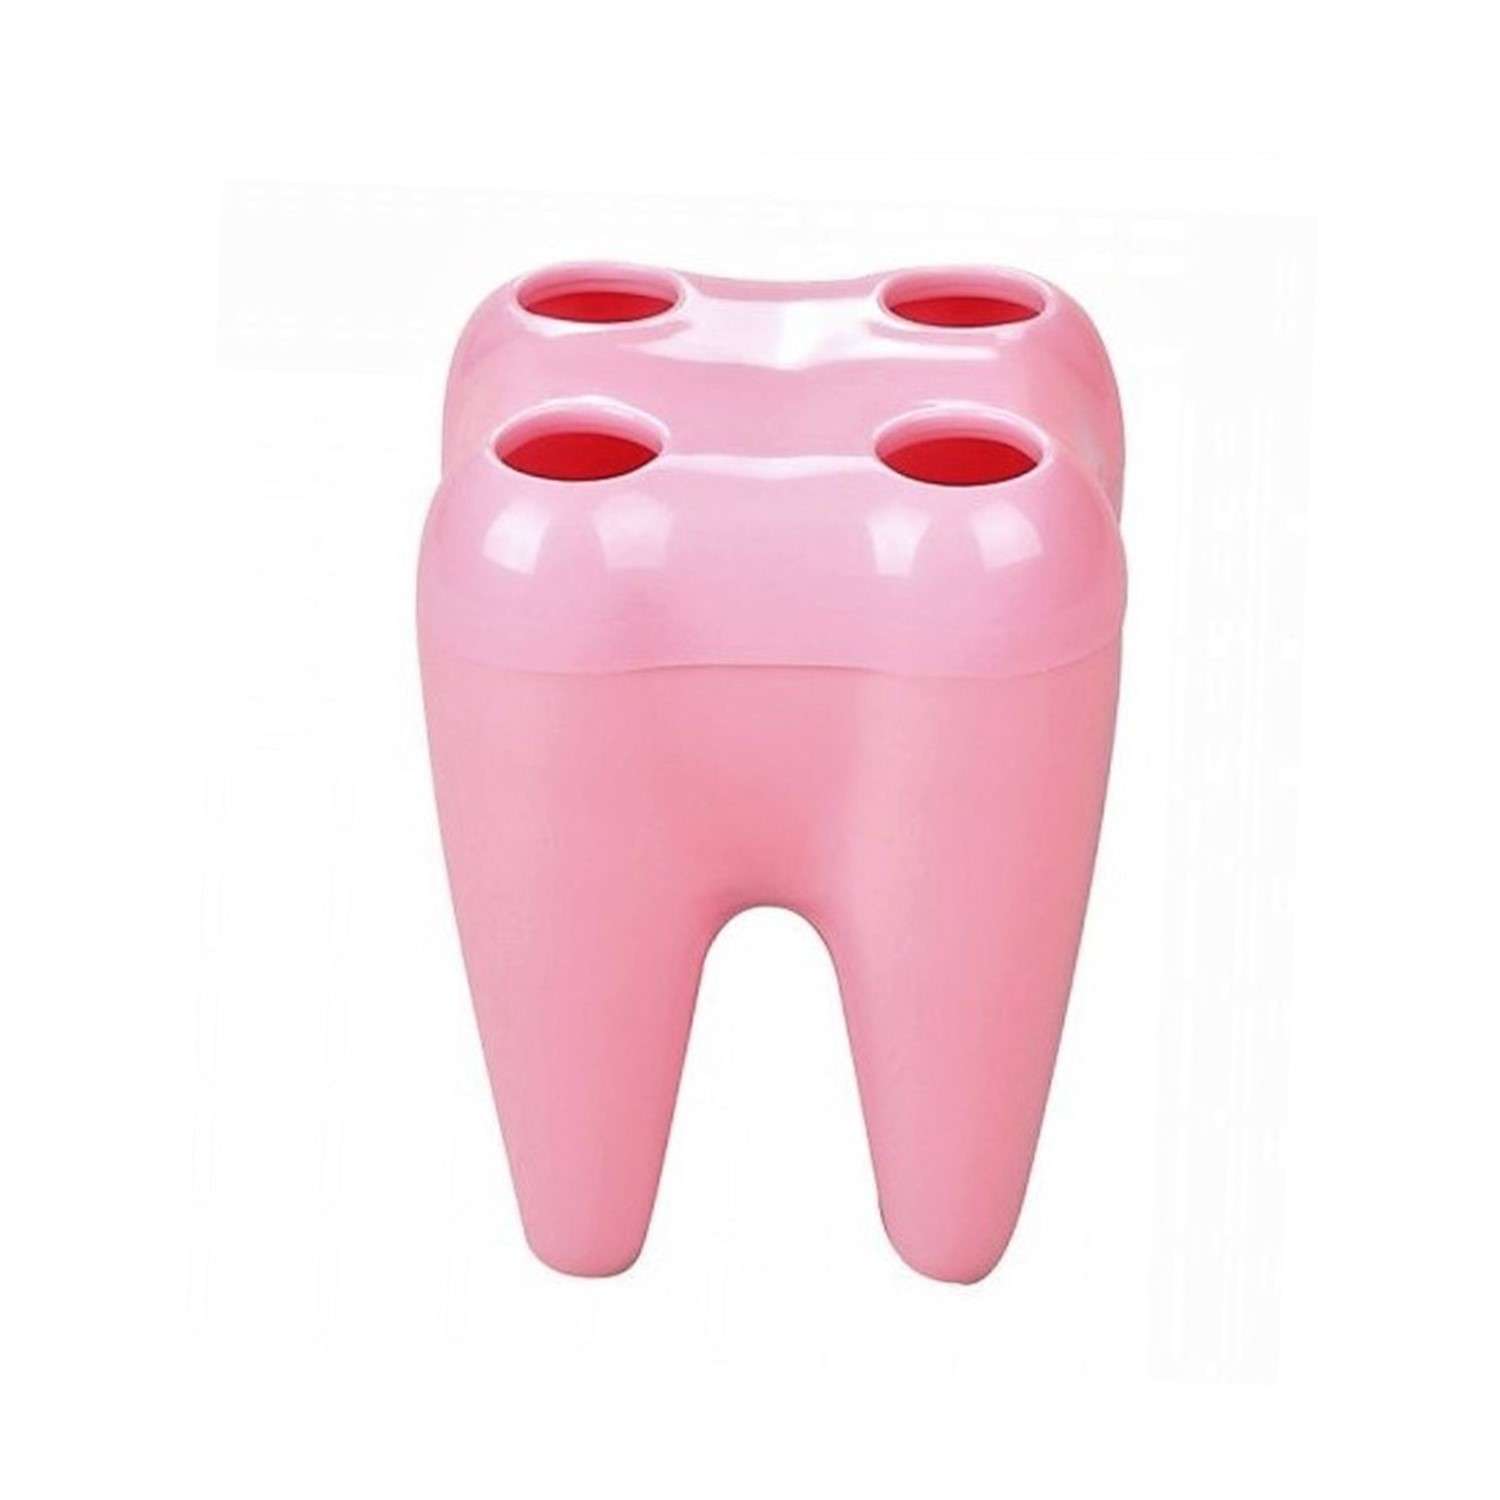 Стакан для зубных щеток Rabizy розовый - фото 1